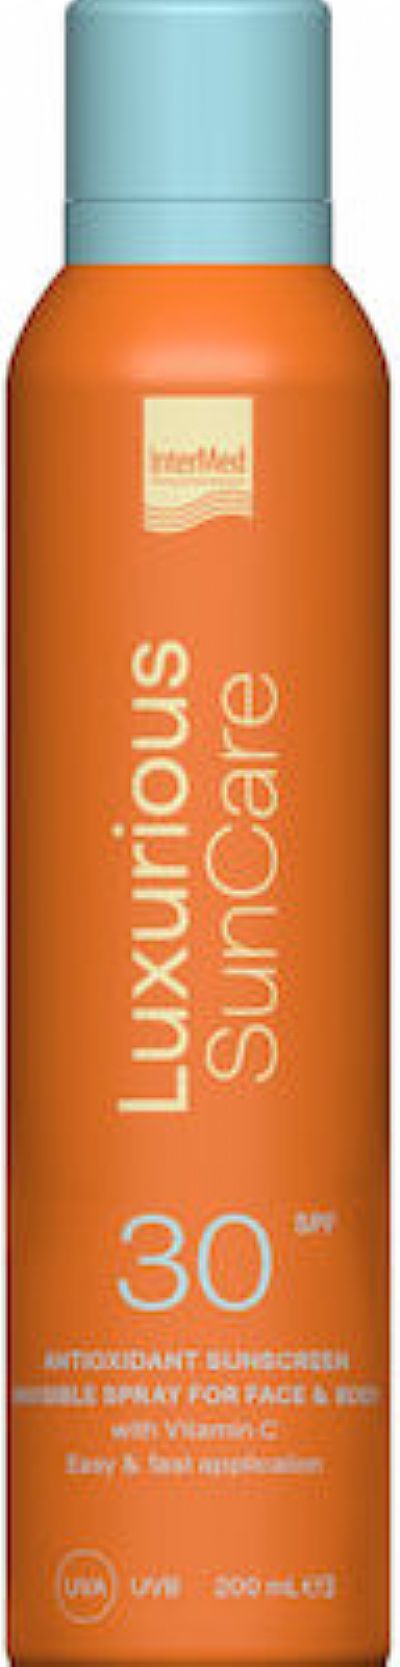 Intermed Luxurious Suncare Αντηλιακή Κρέμα για το Σώμα SPF30 σε Spray 200ml